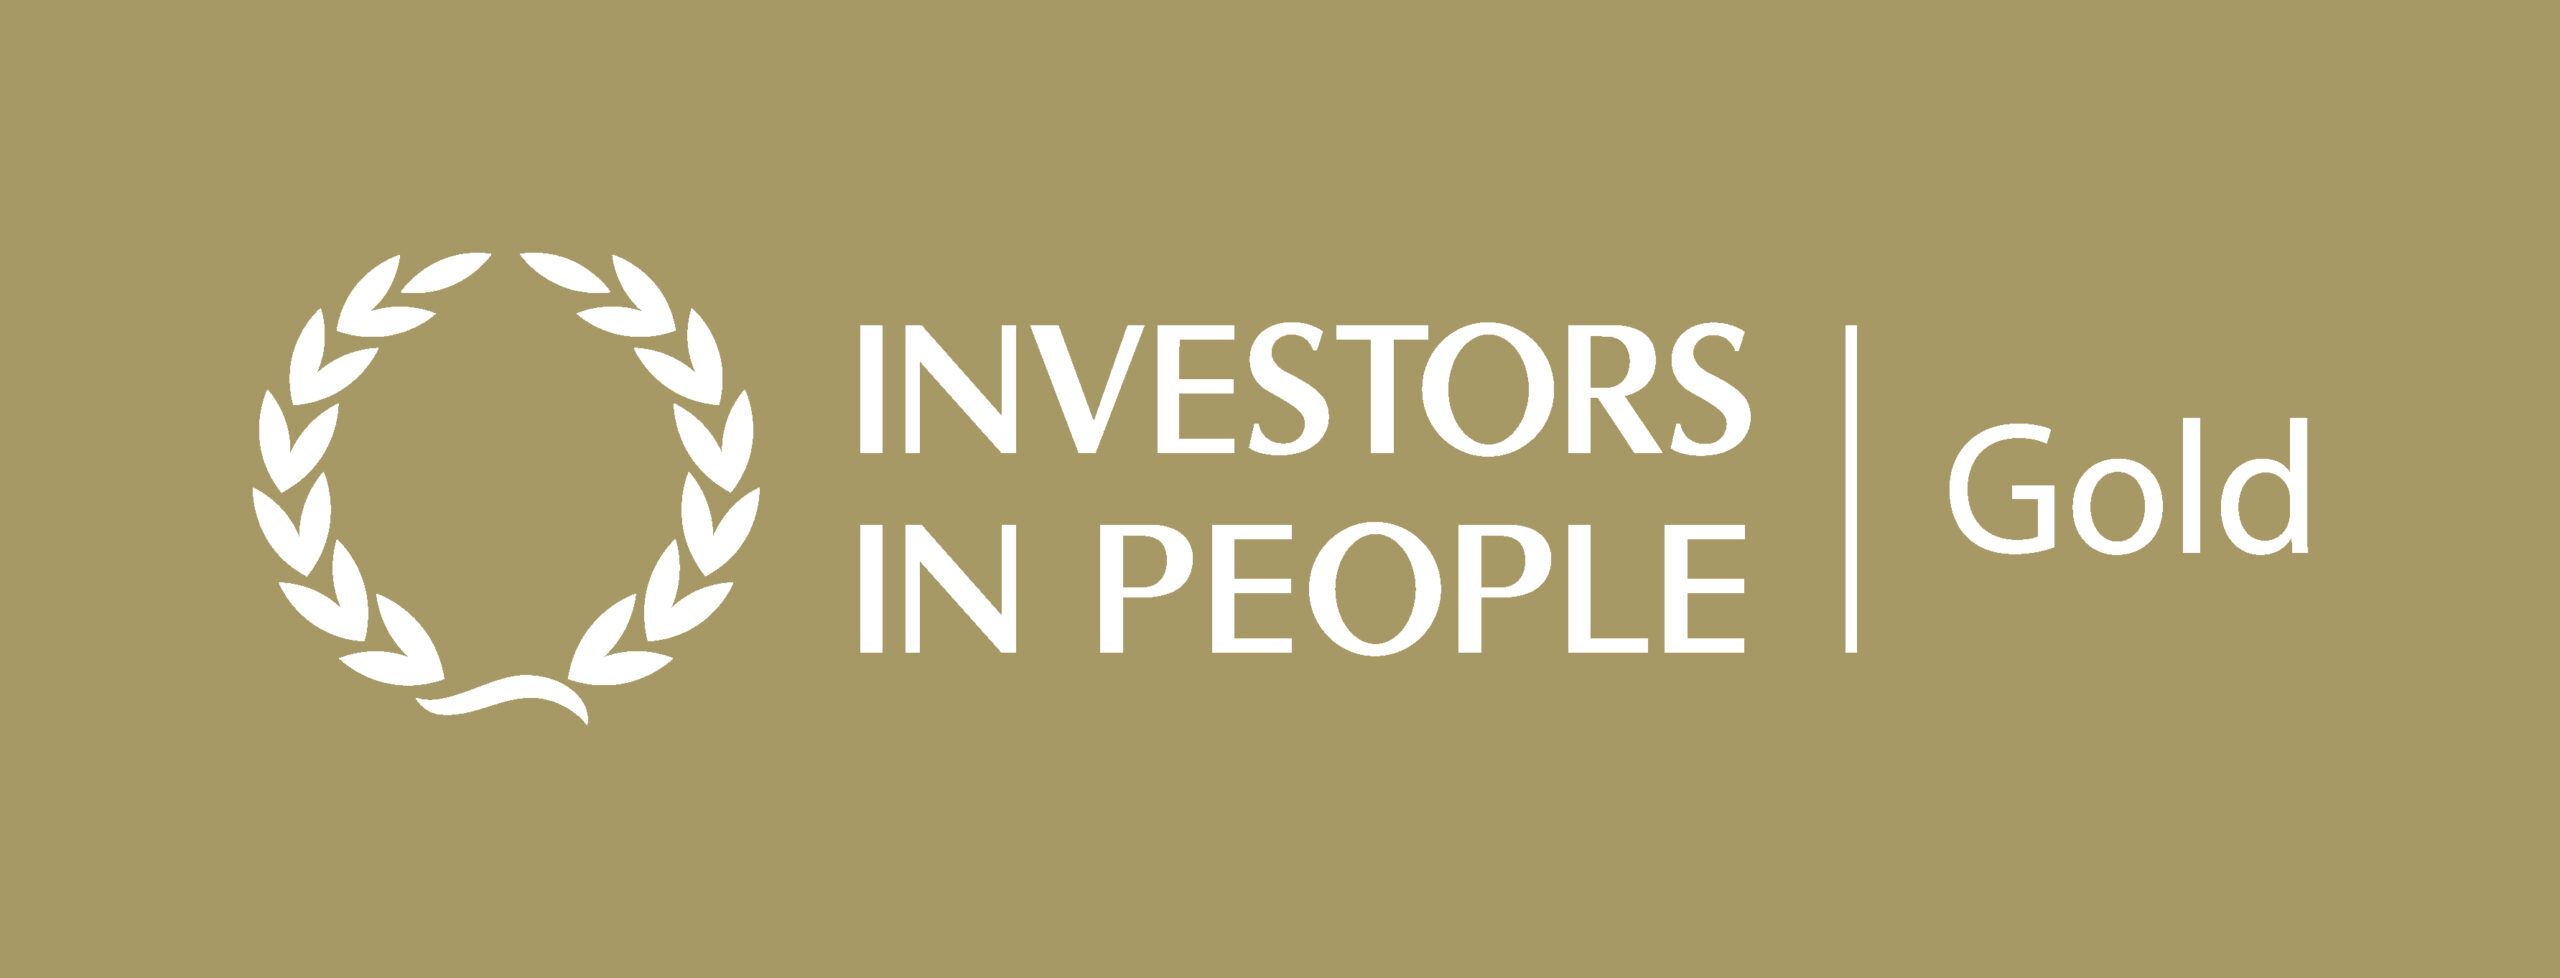 Gold Investors in People for Starglaze